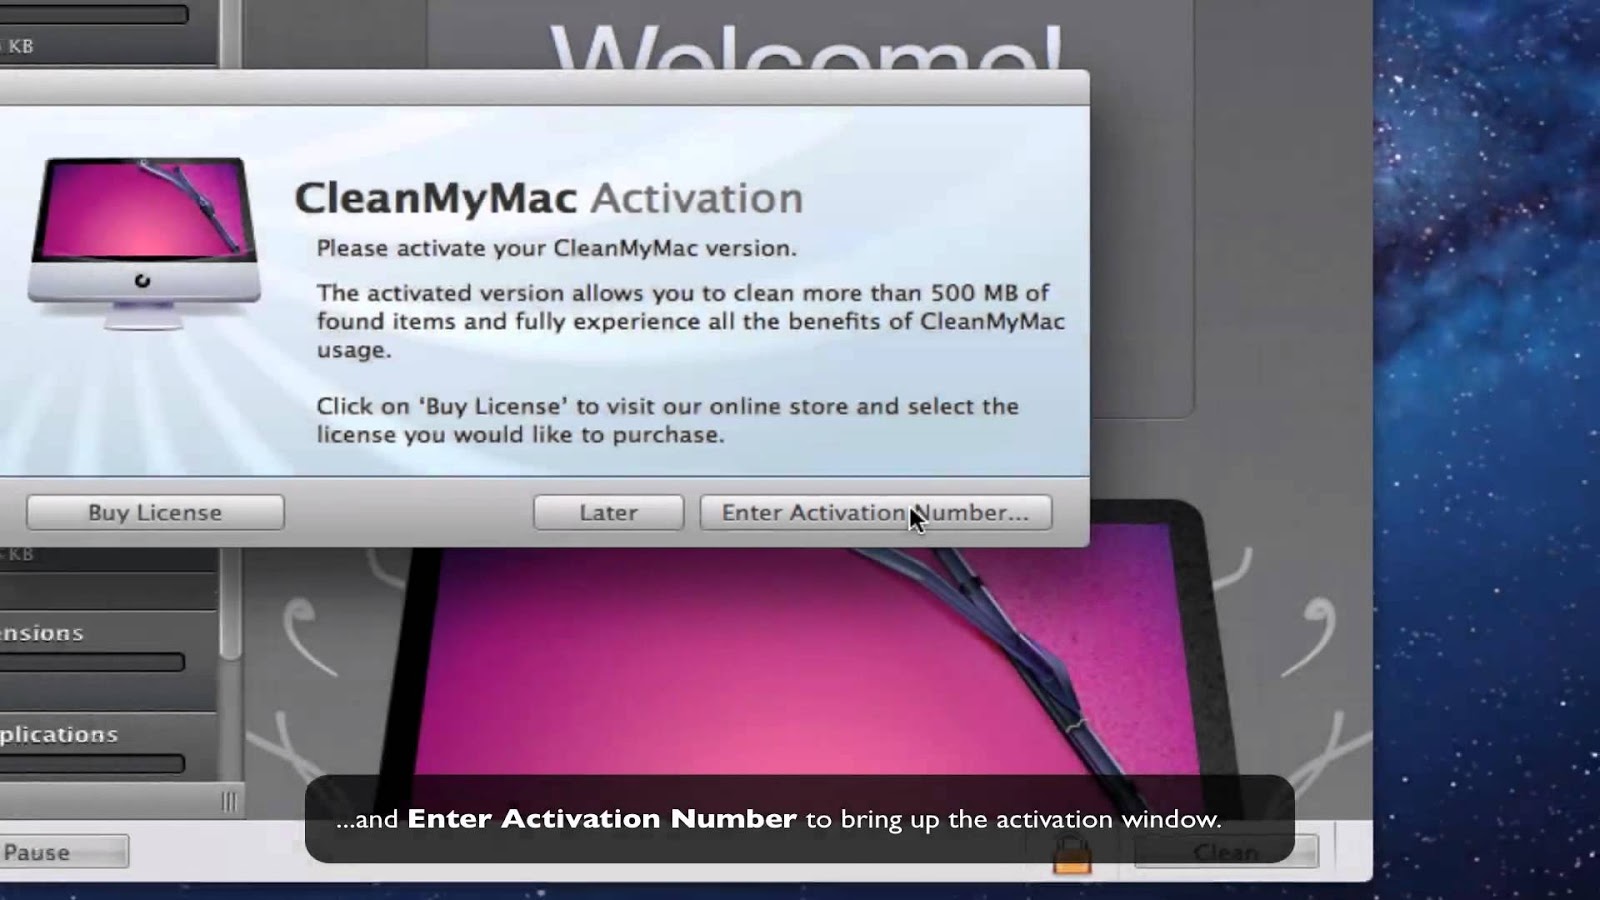 cleanmymac 4 activation code